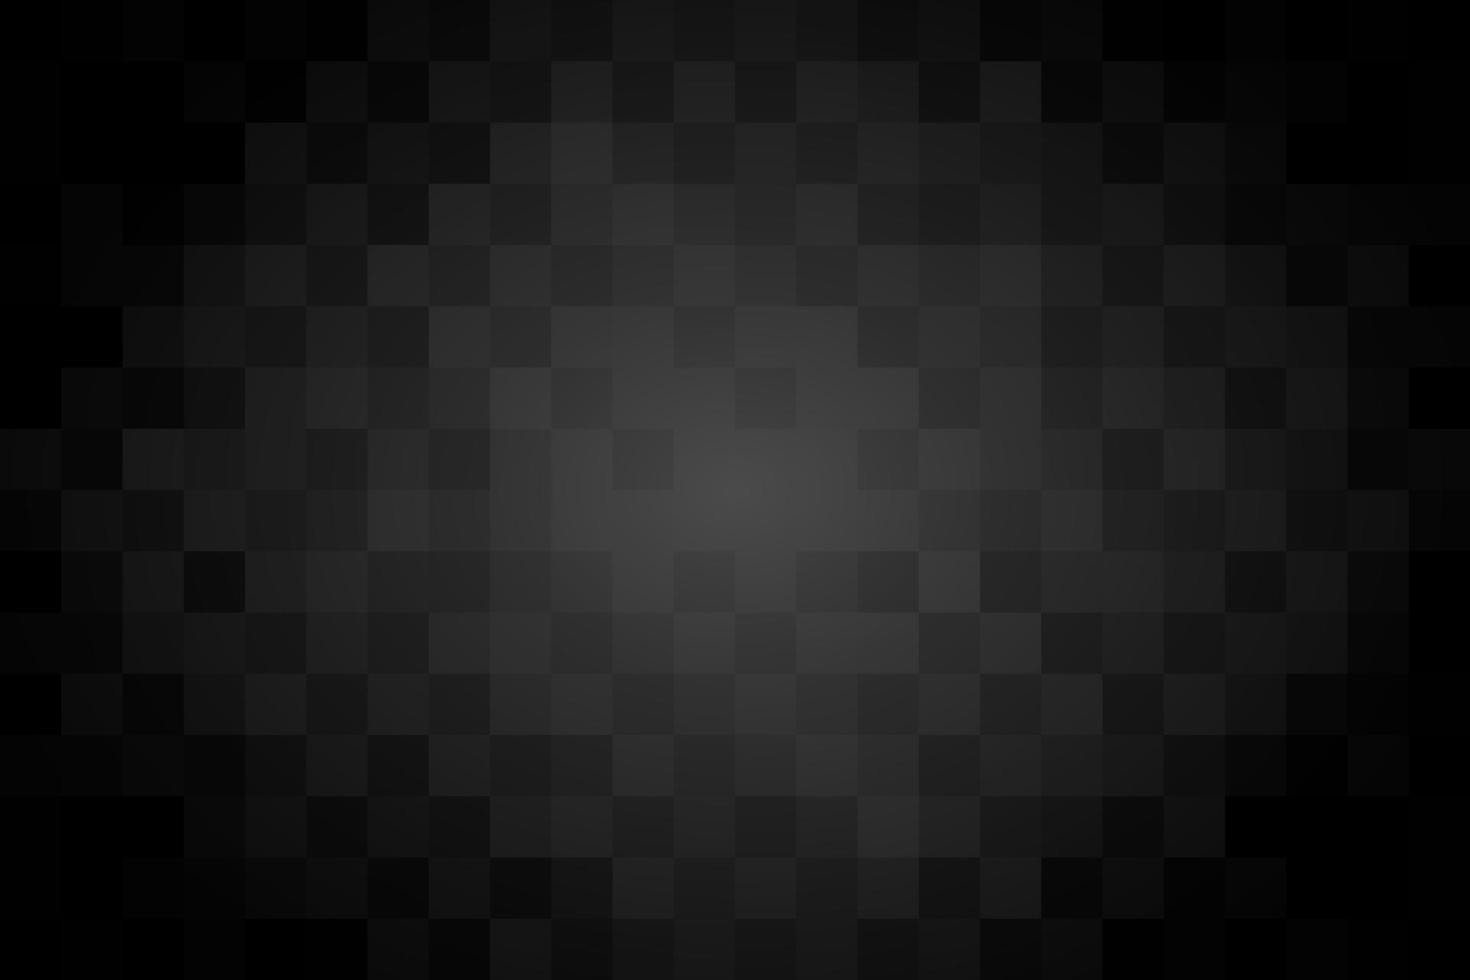 Gray Gradient Black Square Shape Background vector